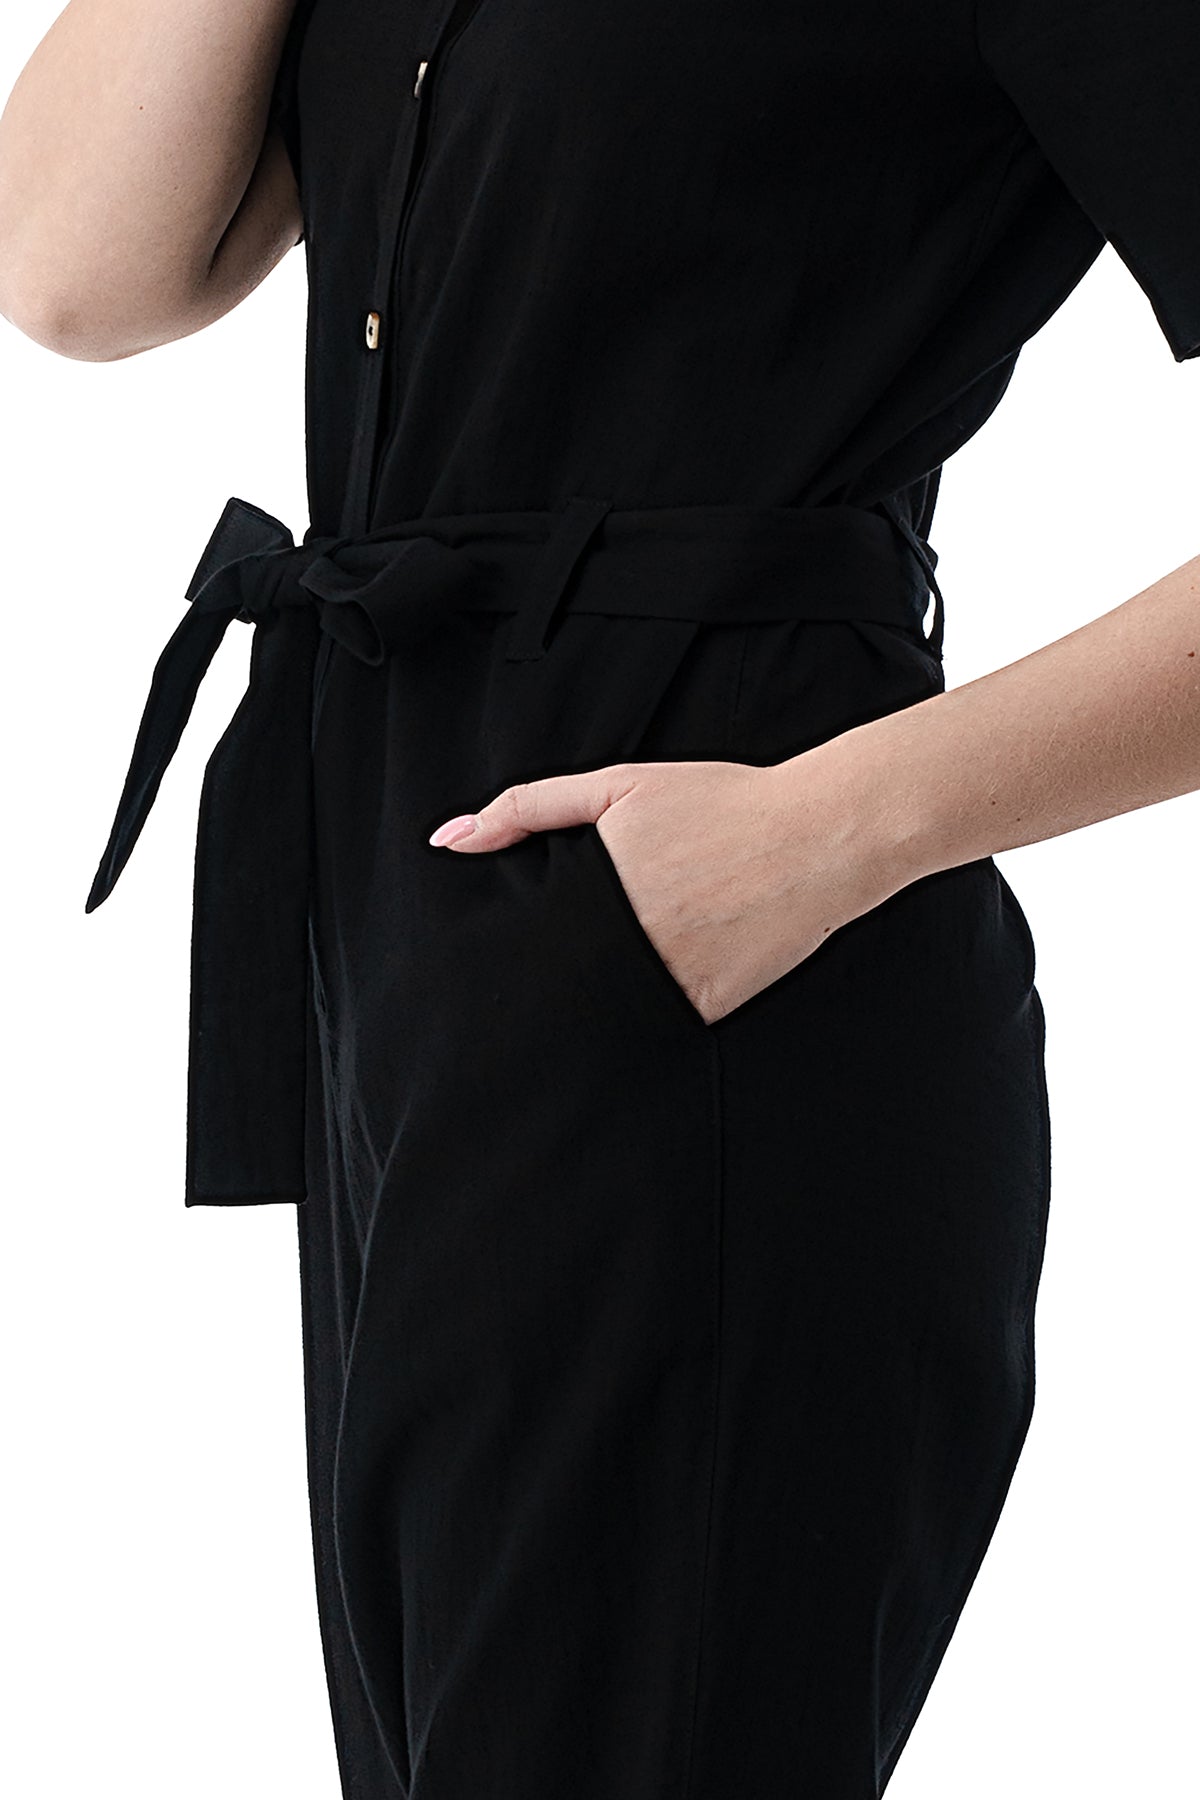 EDGY Land Girl's and Women's Button Down Mid Waist Short Sleeve Self Tie Belt Shirt Jumpsuit